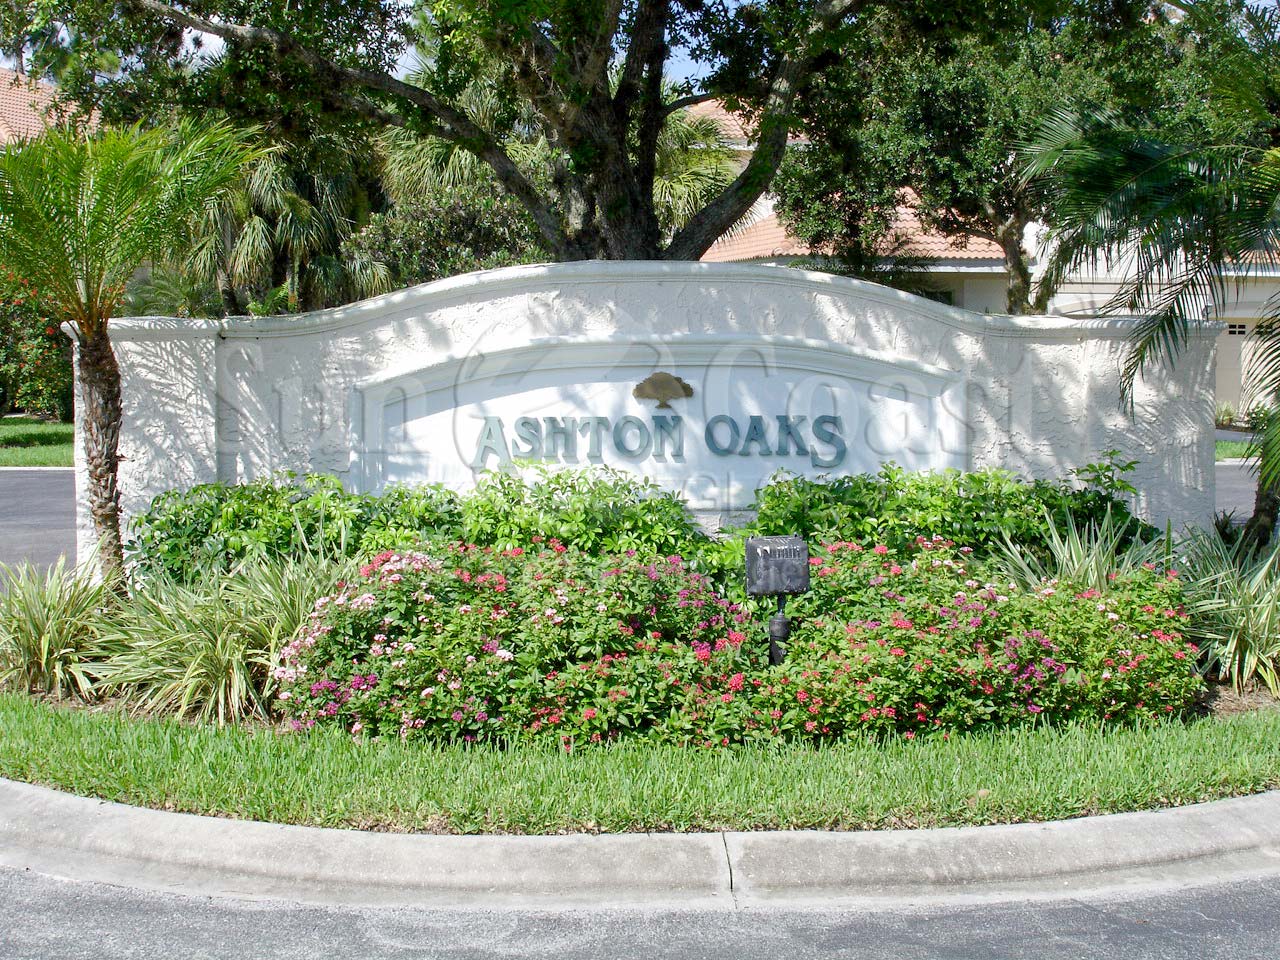 Ashton Oaks sign